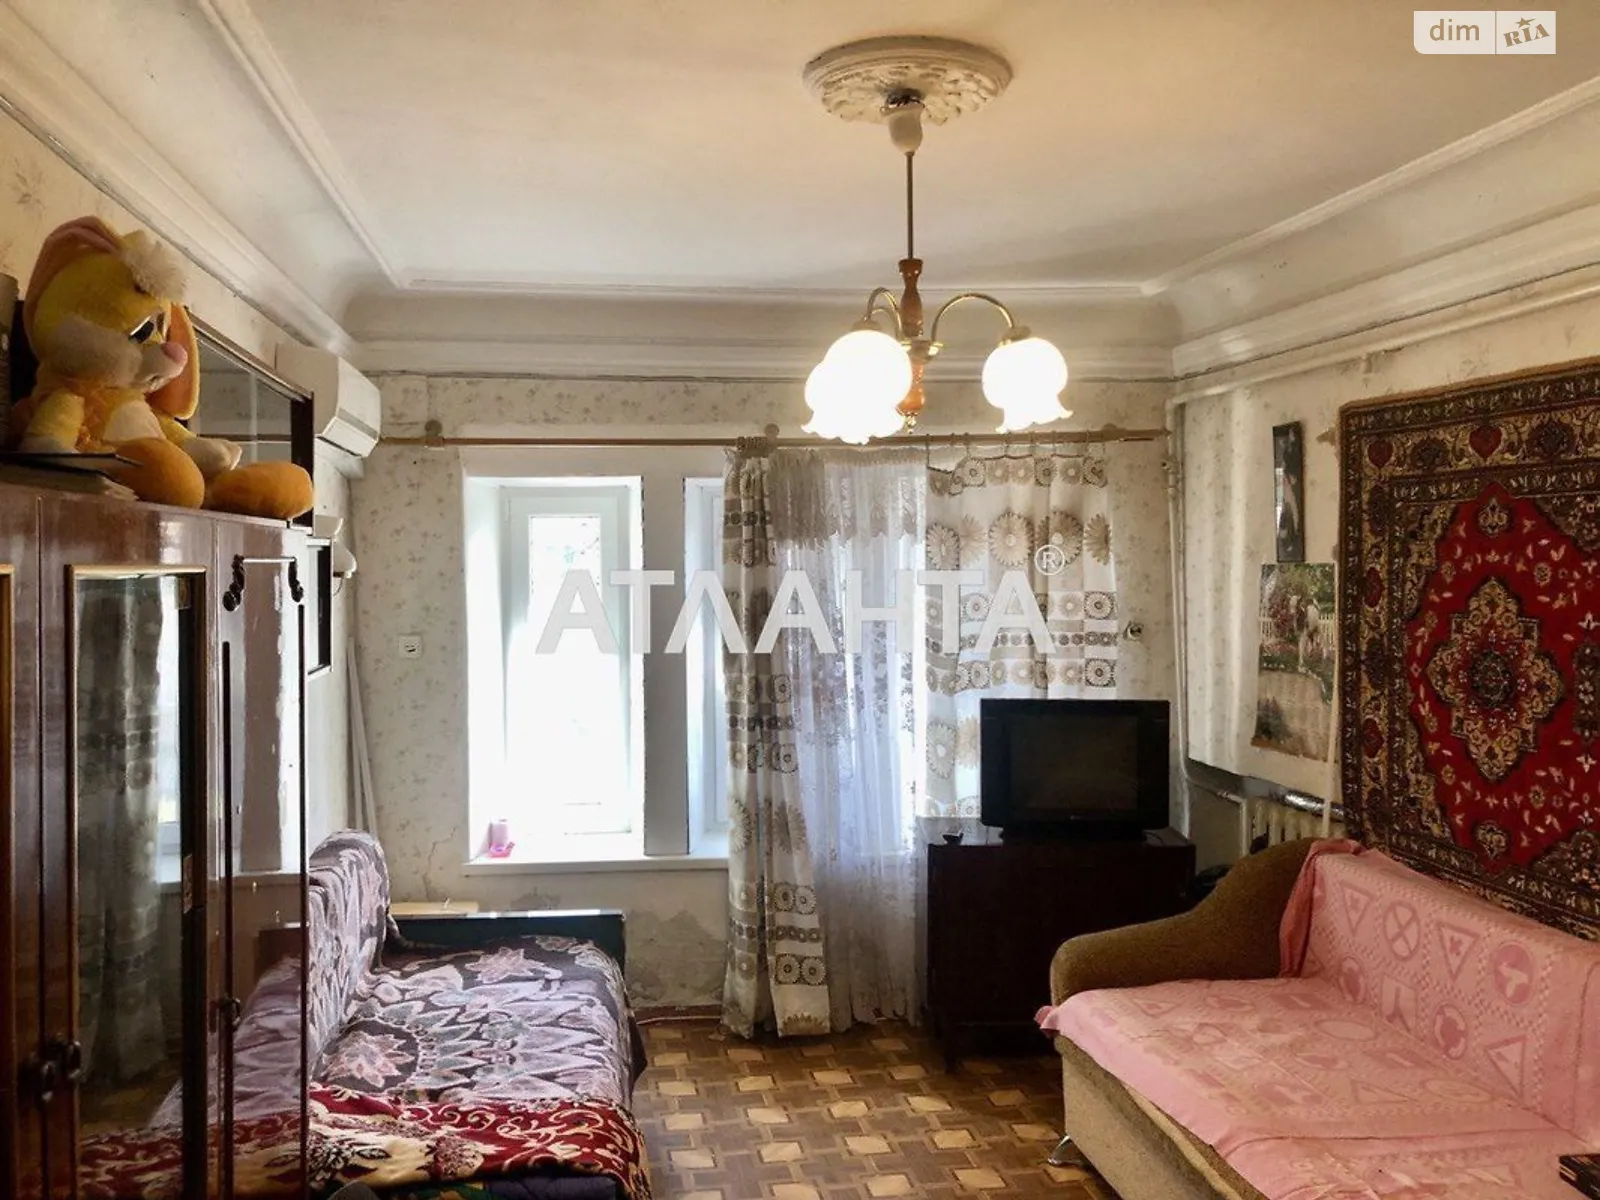 Продается комната 16 кв. м в Одессе, цена: 8500 $ - фото 1